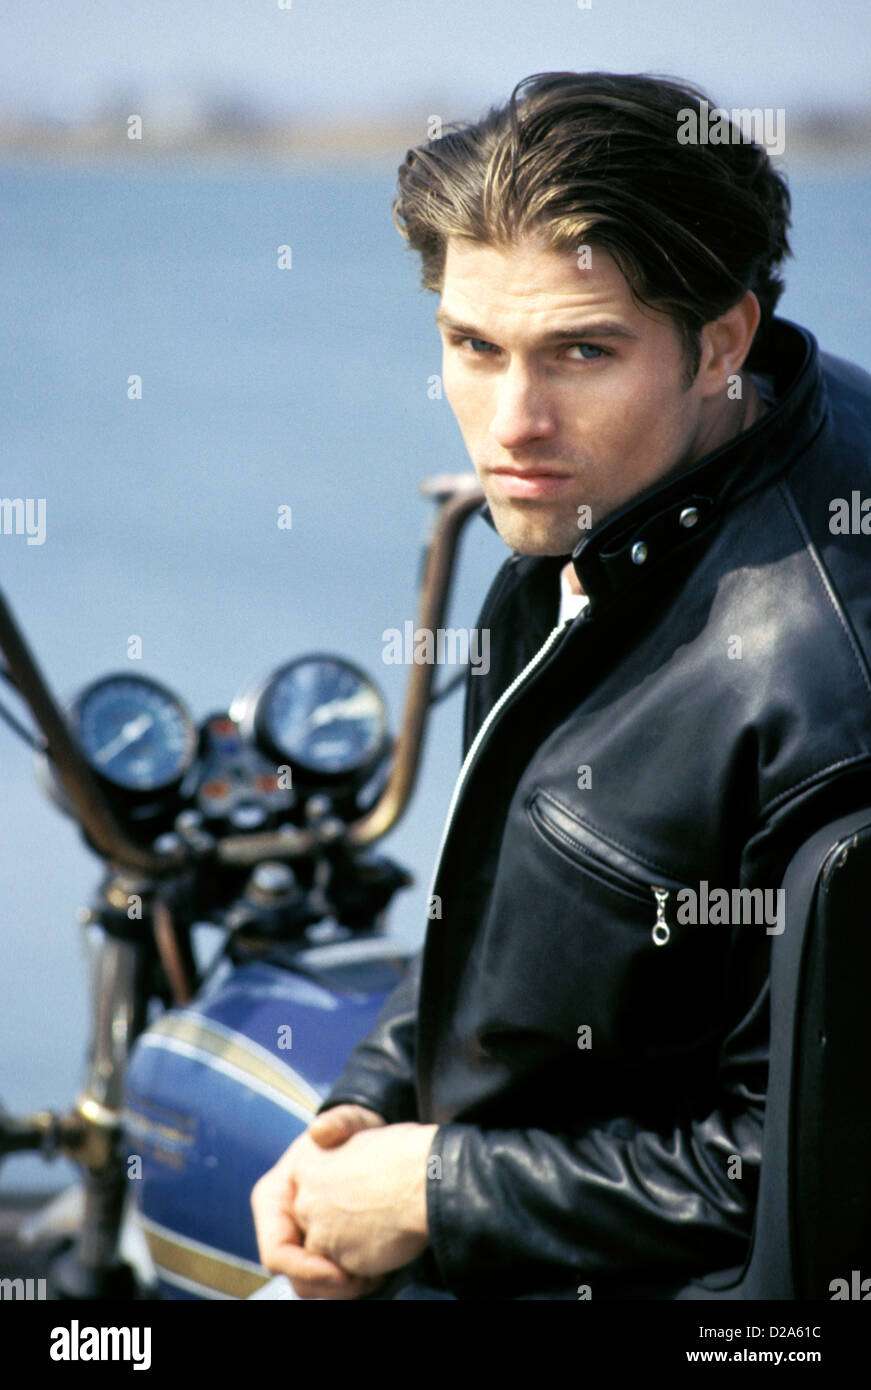 Mann In schwarzer Lederjacke auf dem Motorrad sitzen Stockfoto